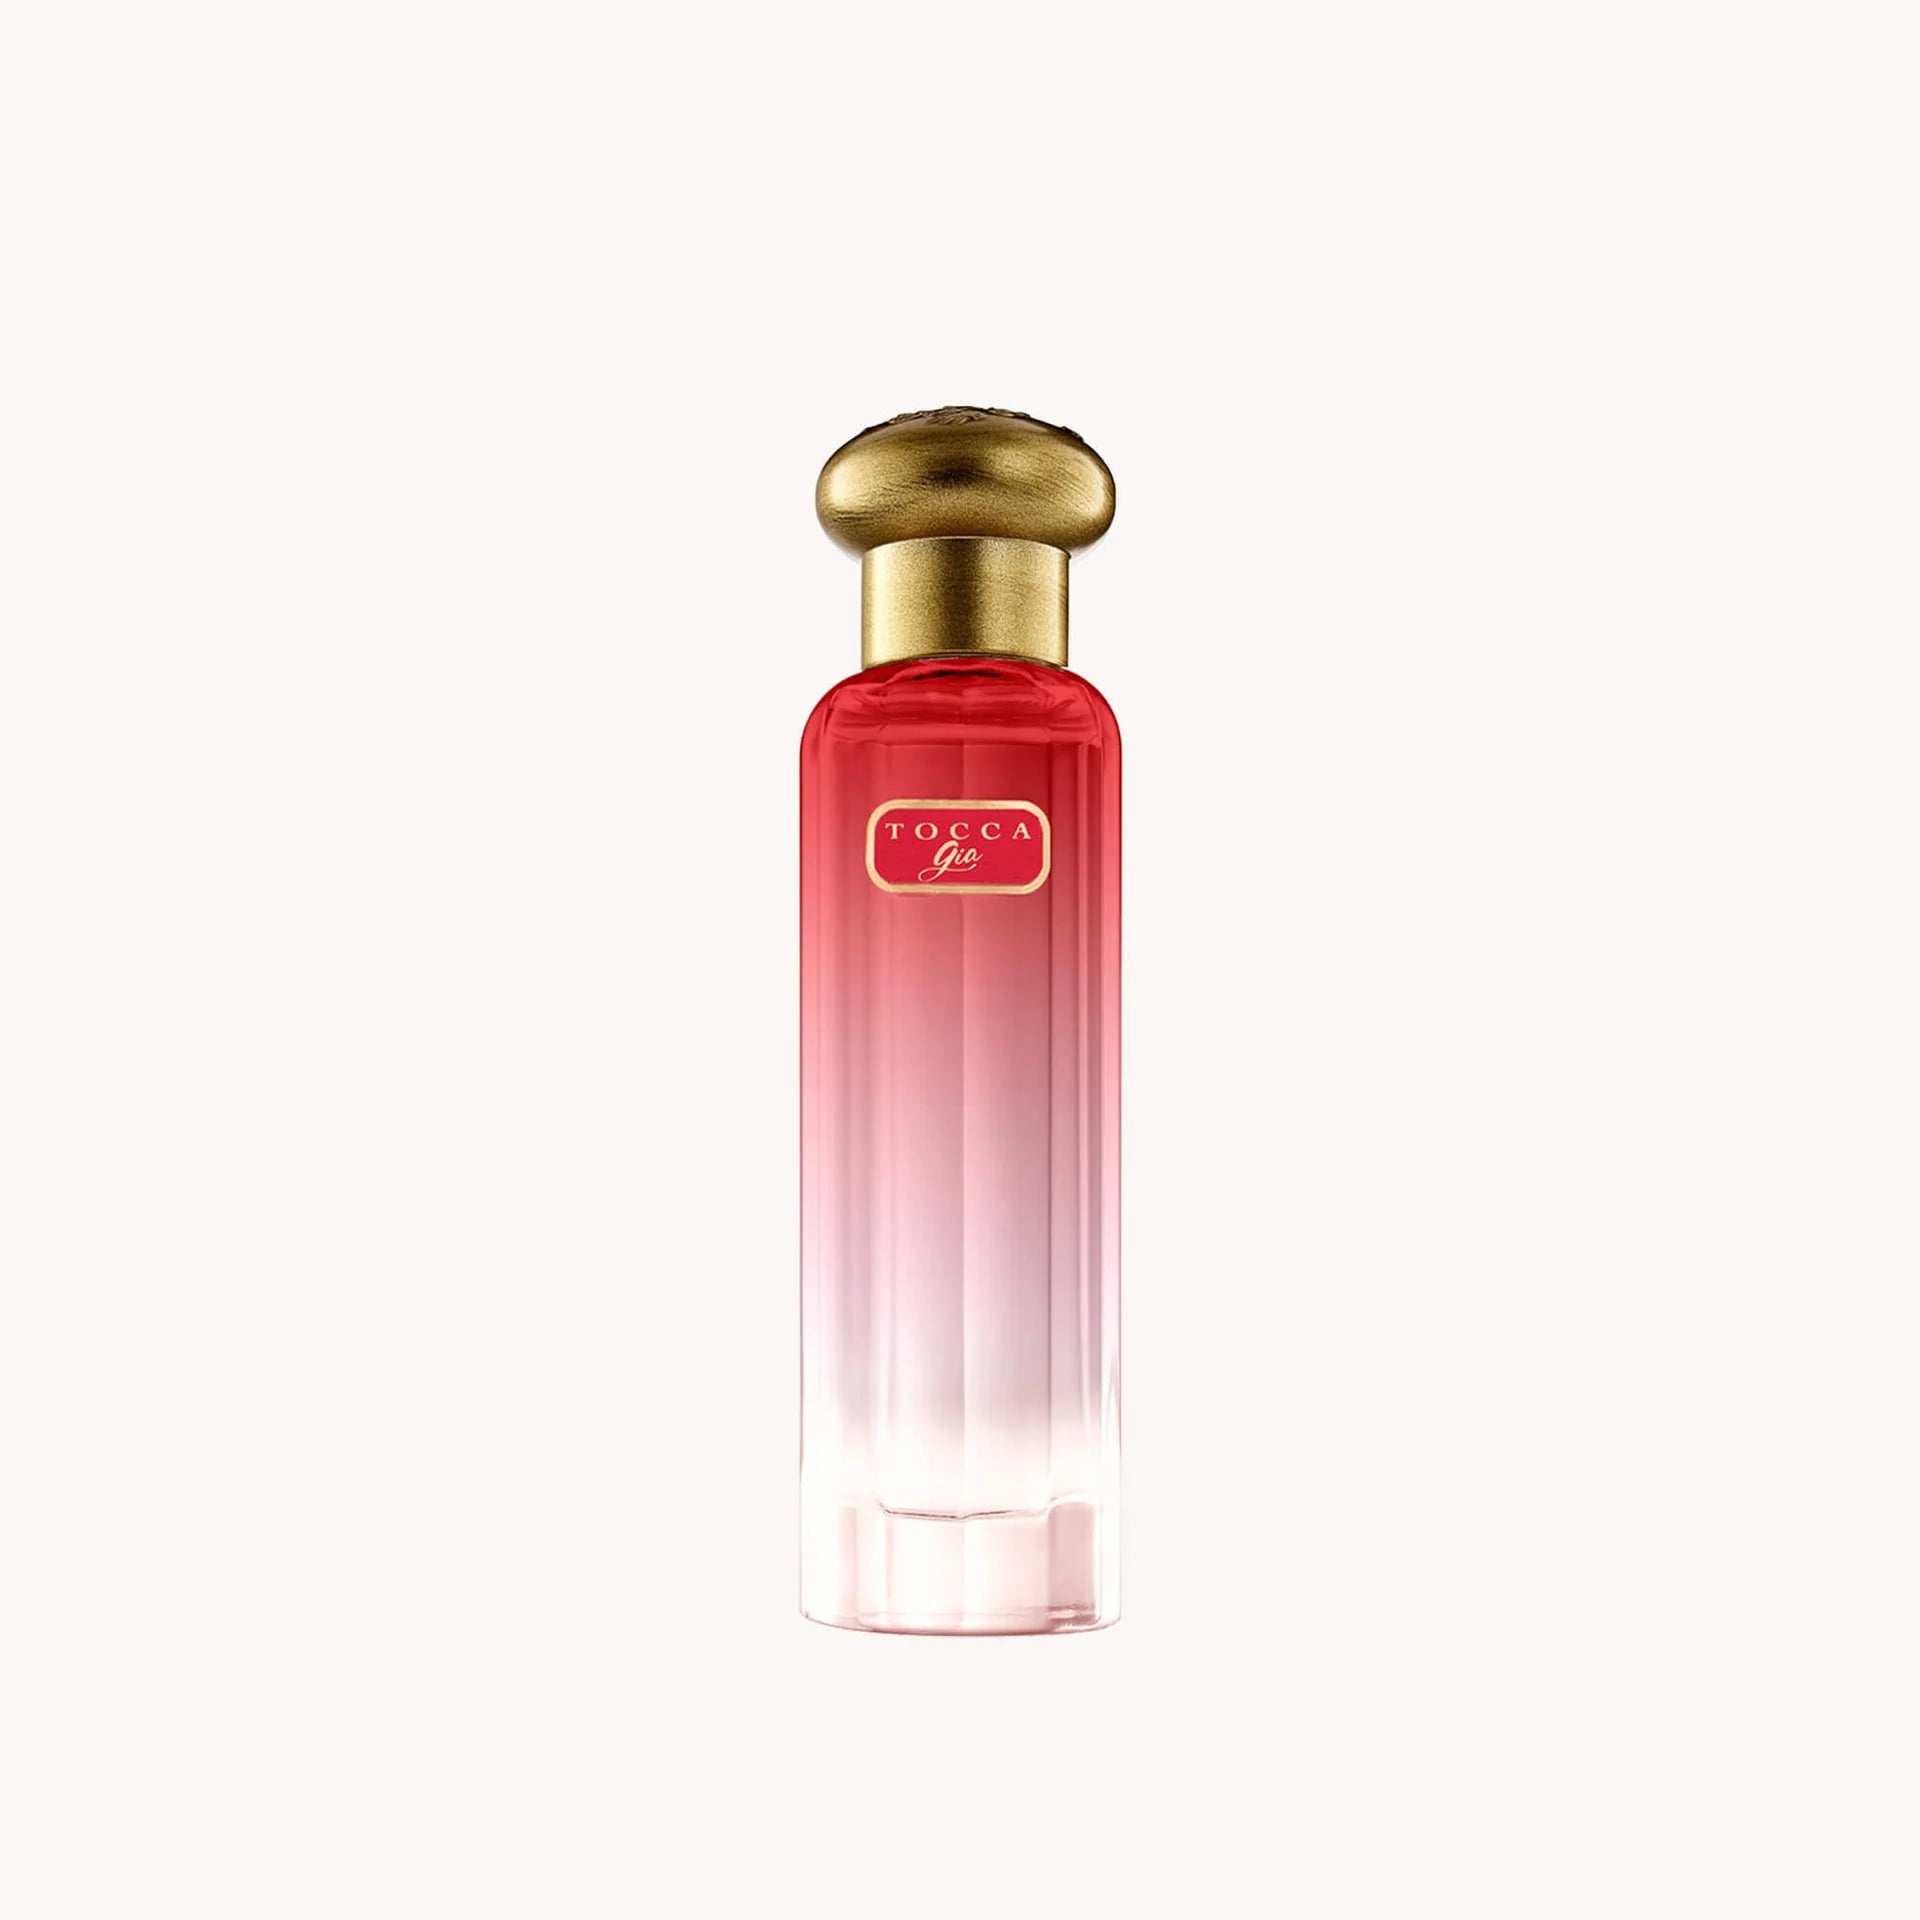 Gia Fragrance Spray